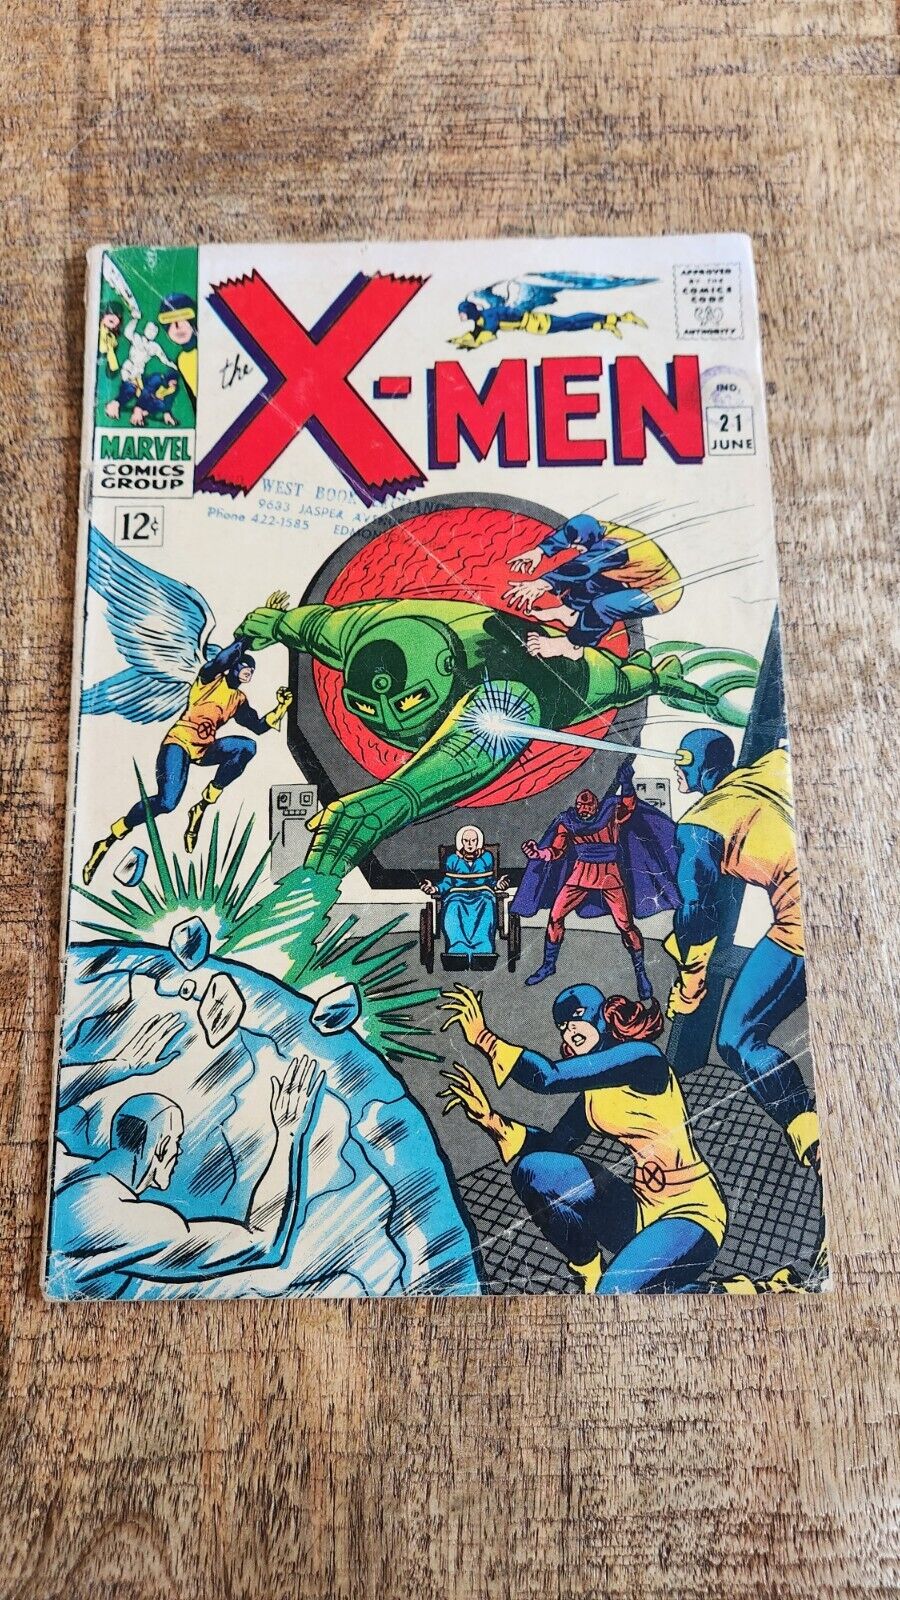 X-Men #21 Marvel Comics June 1966 GD/VG 3.0 Silver Age Jean Grey Cyclops